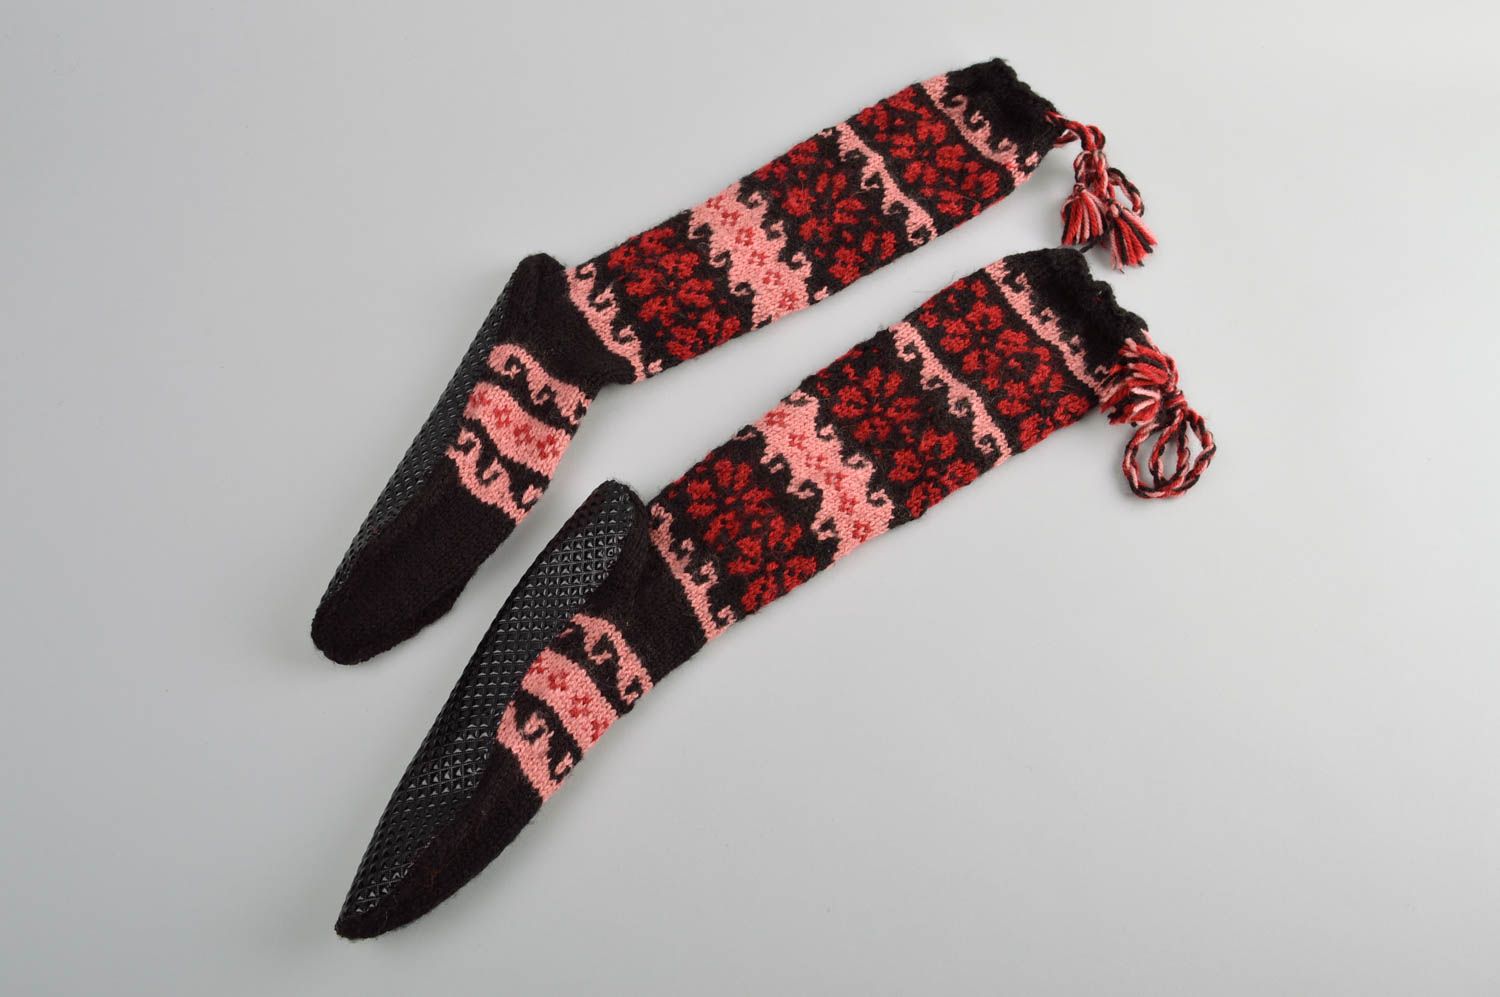 Handmade woolen warm socks unusual winter socks stylish winter accessory photo 2